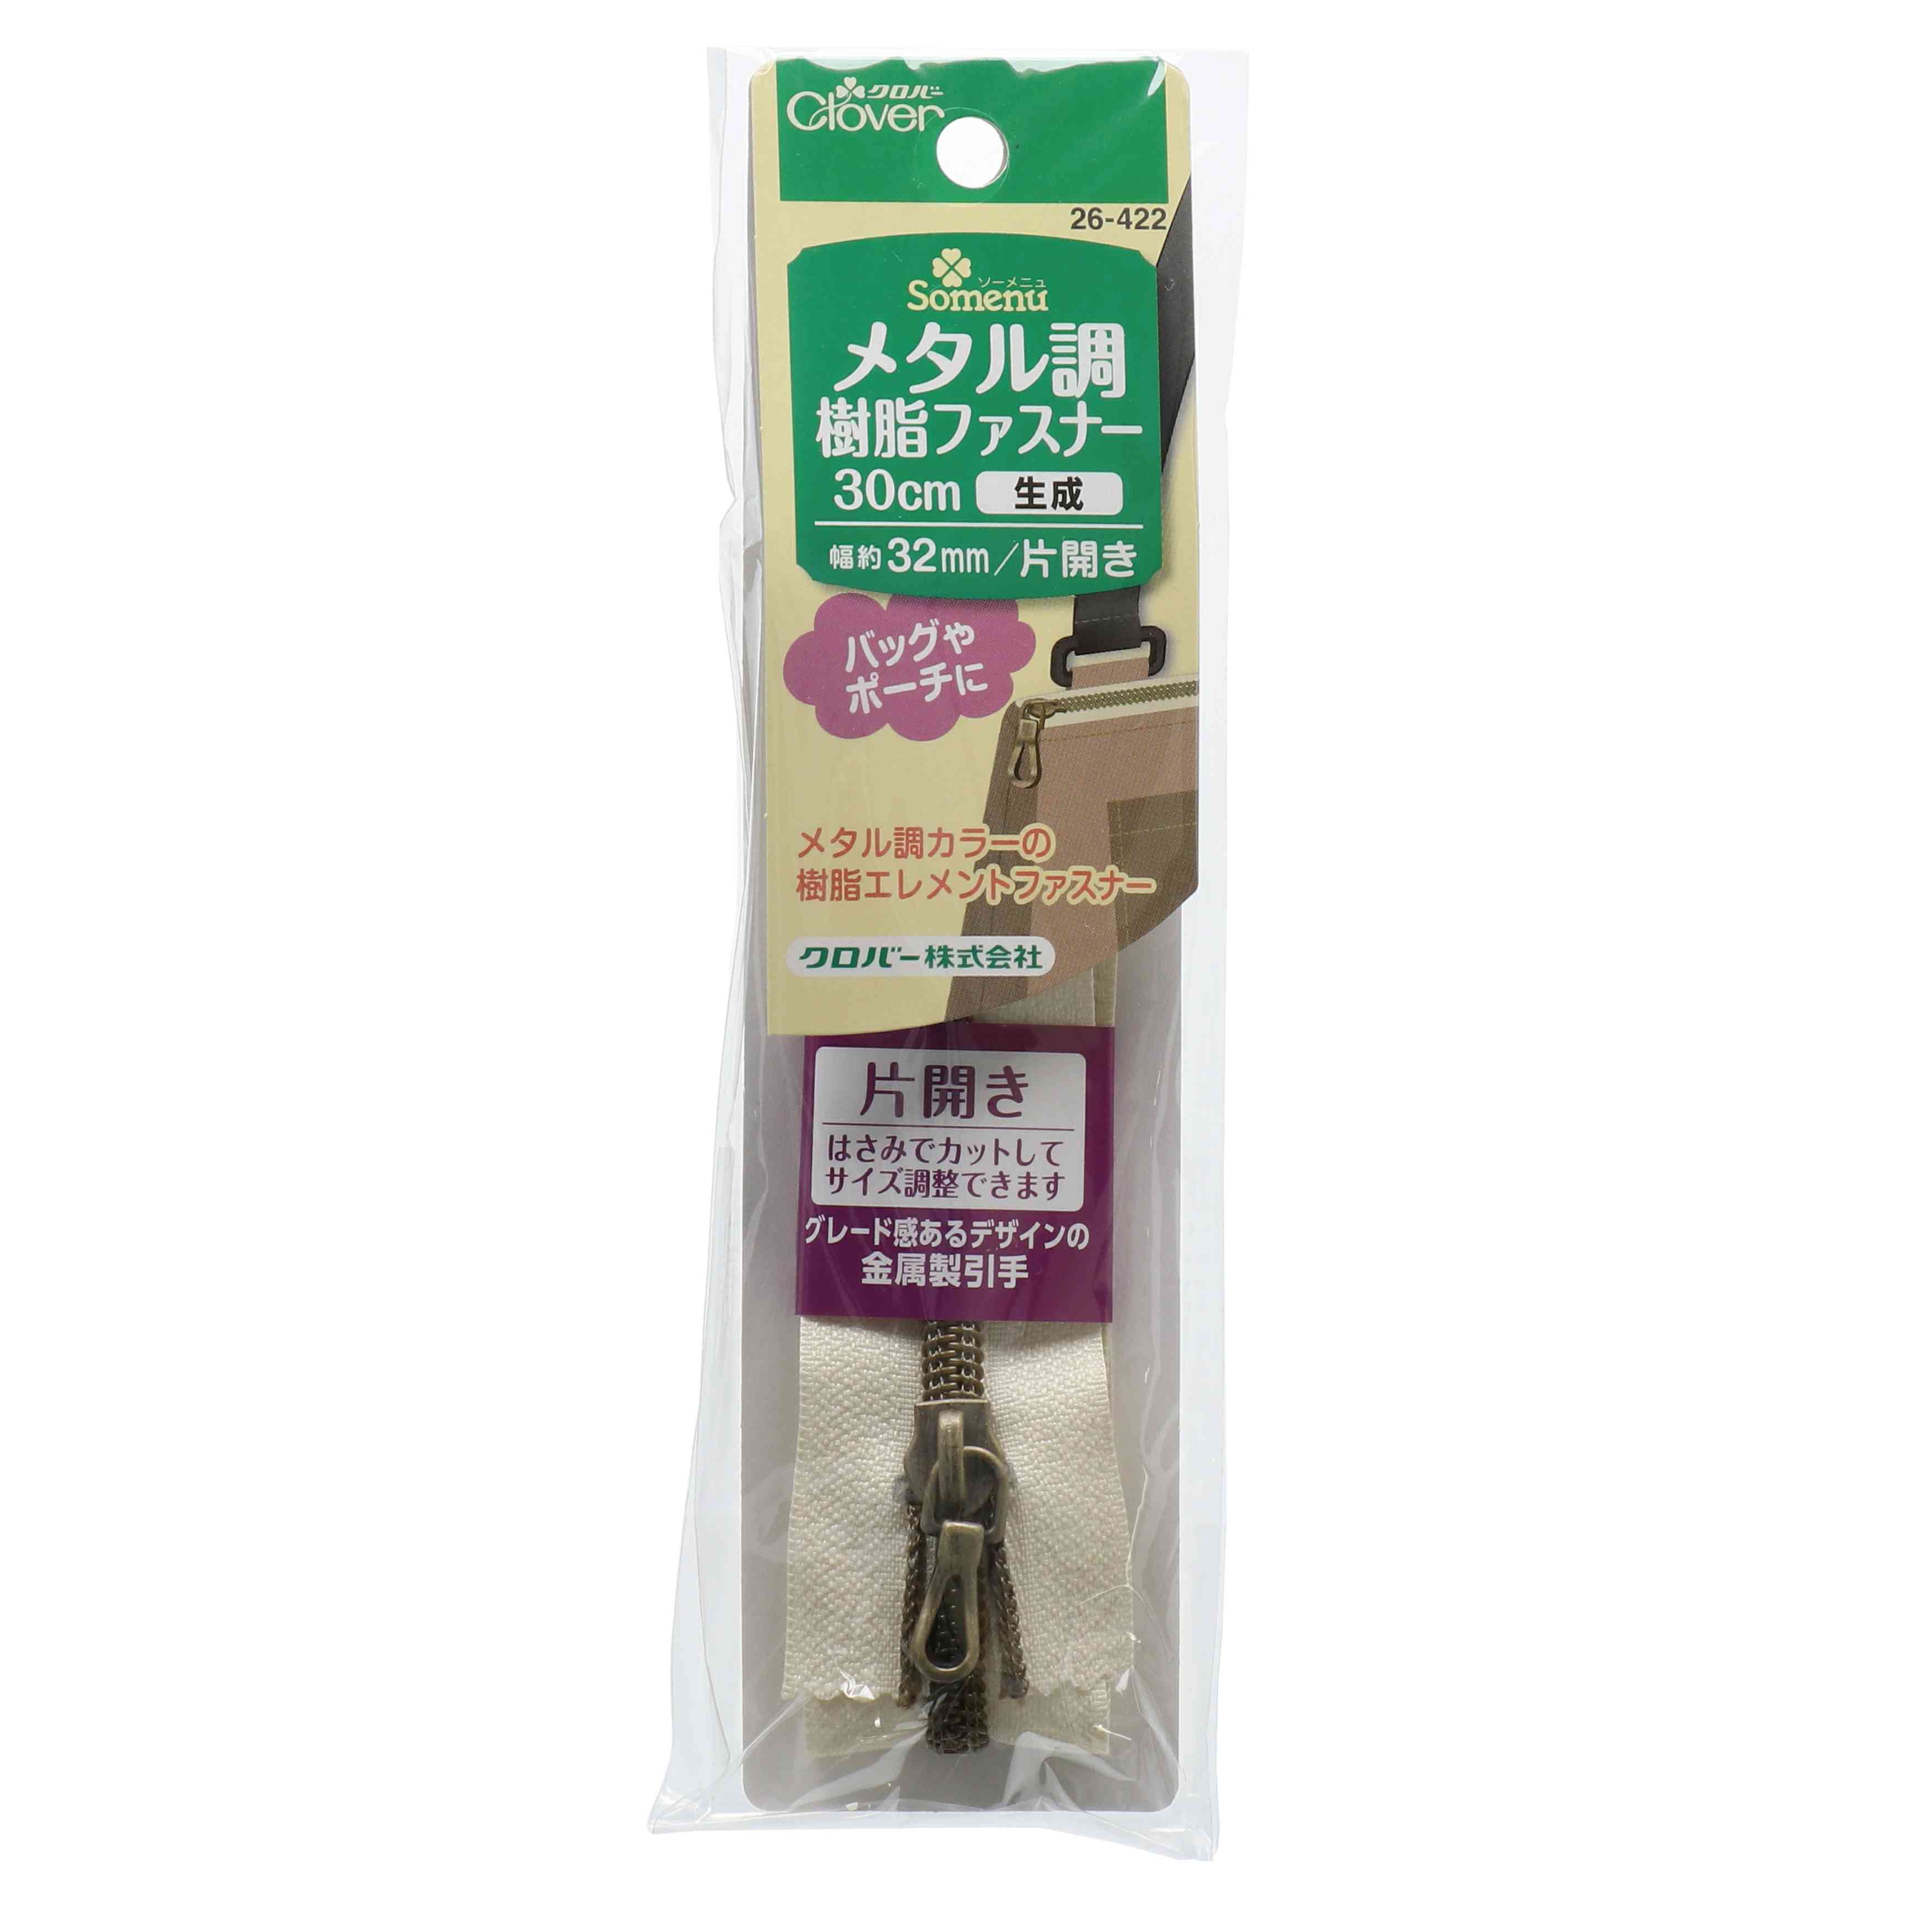 26422 Metal-like Resin Zipper 30cm Single Opening Generation[Handicraft Supplies] Clover